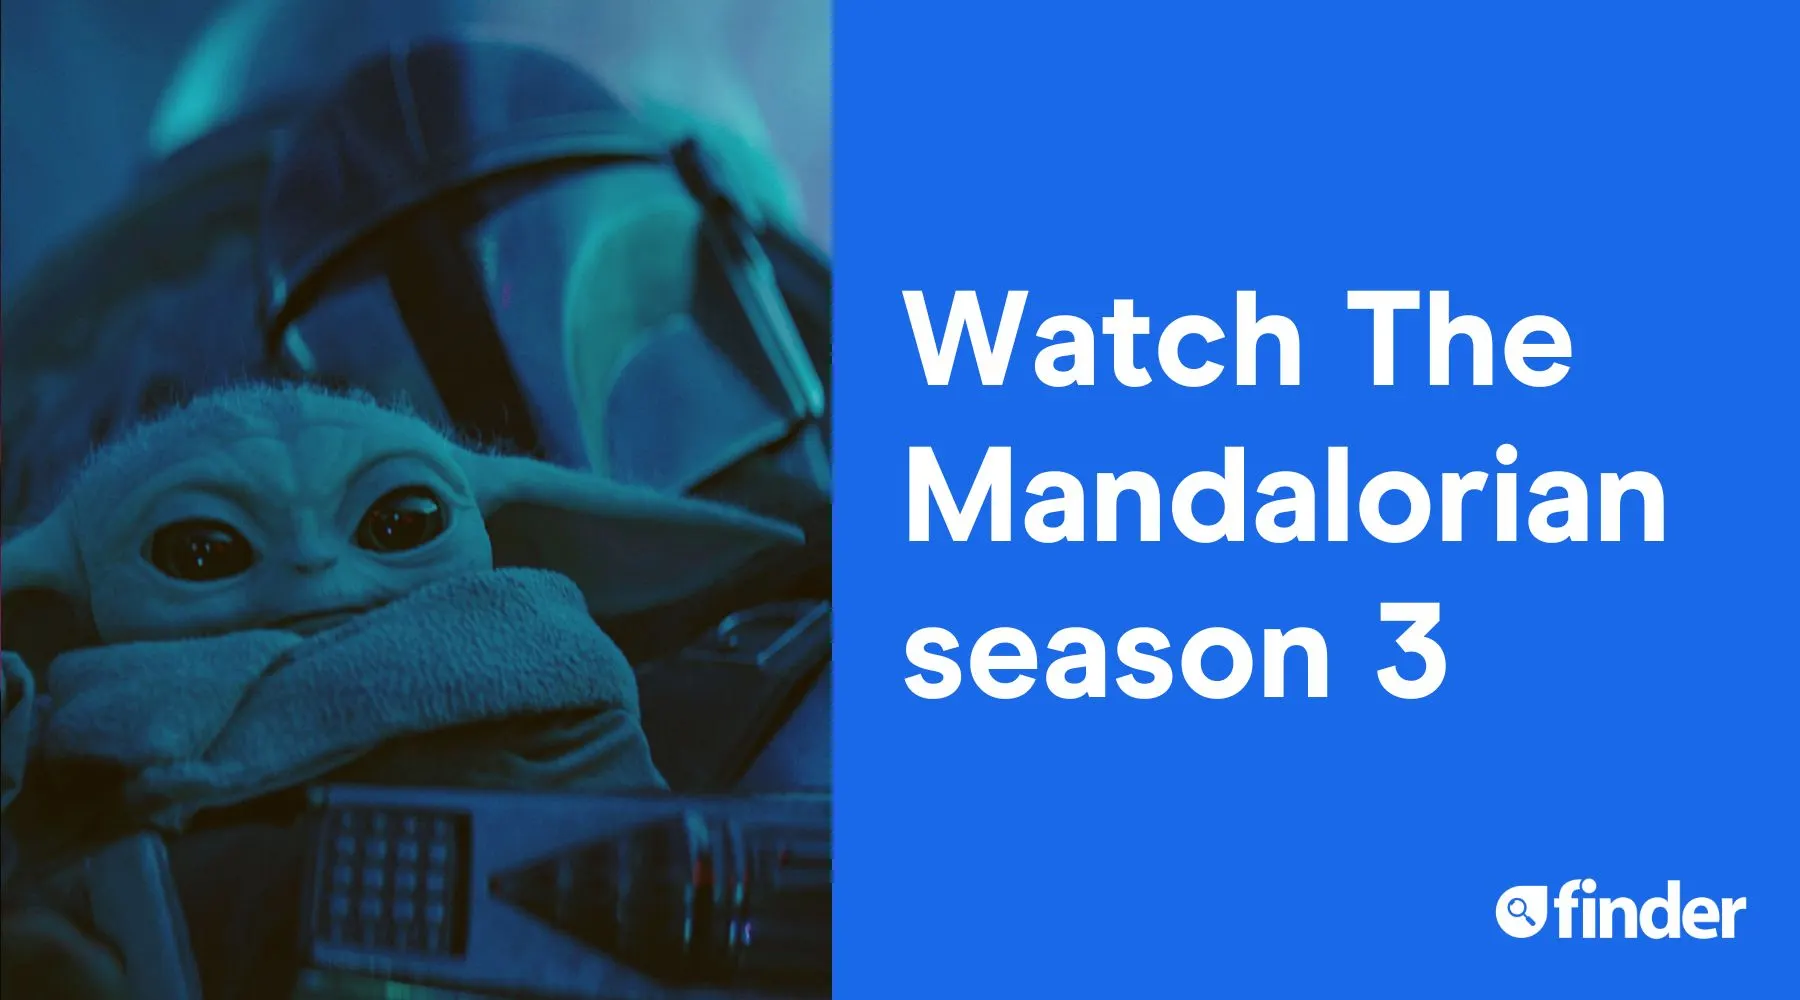 The Mandalorian Season 3 Episode 3 Disney+ Release Date & Time